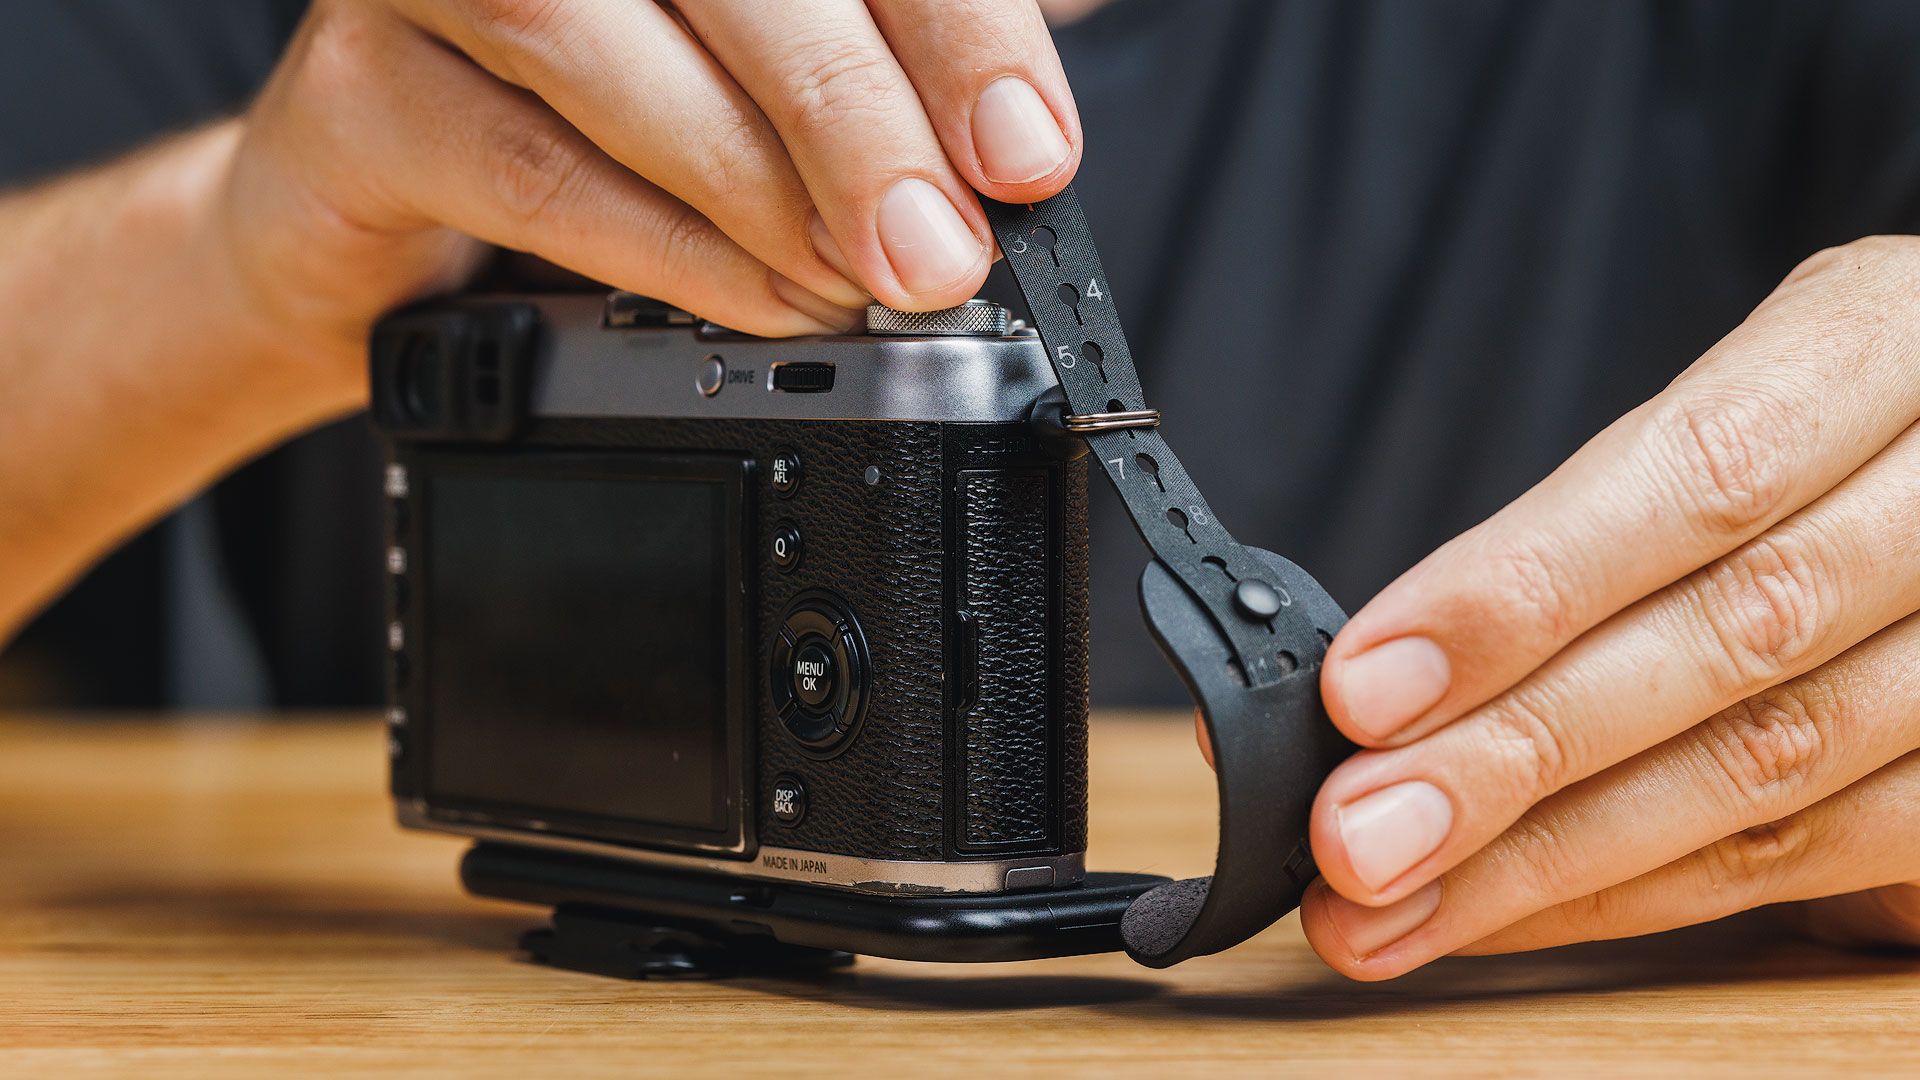 Threading the Peak Design Micro Clutch strap through an eyelet on a Fuji camera